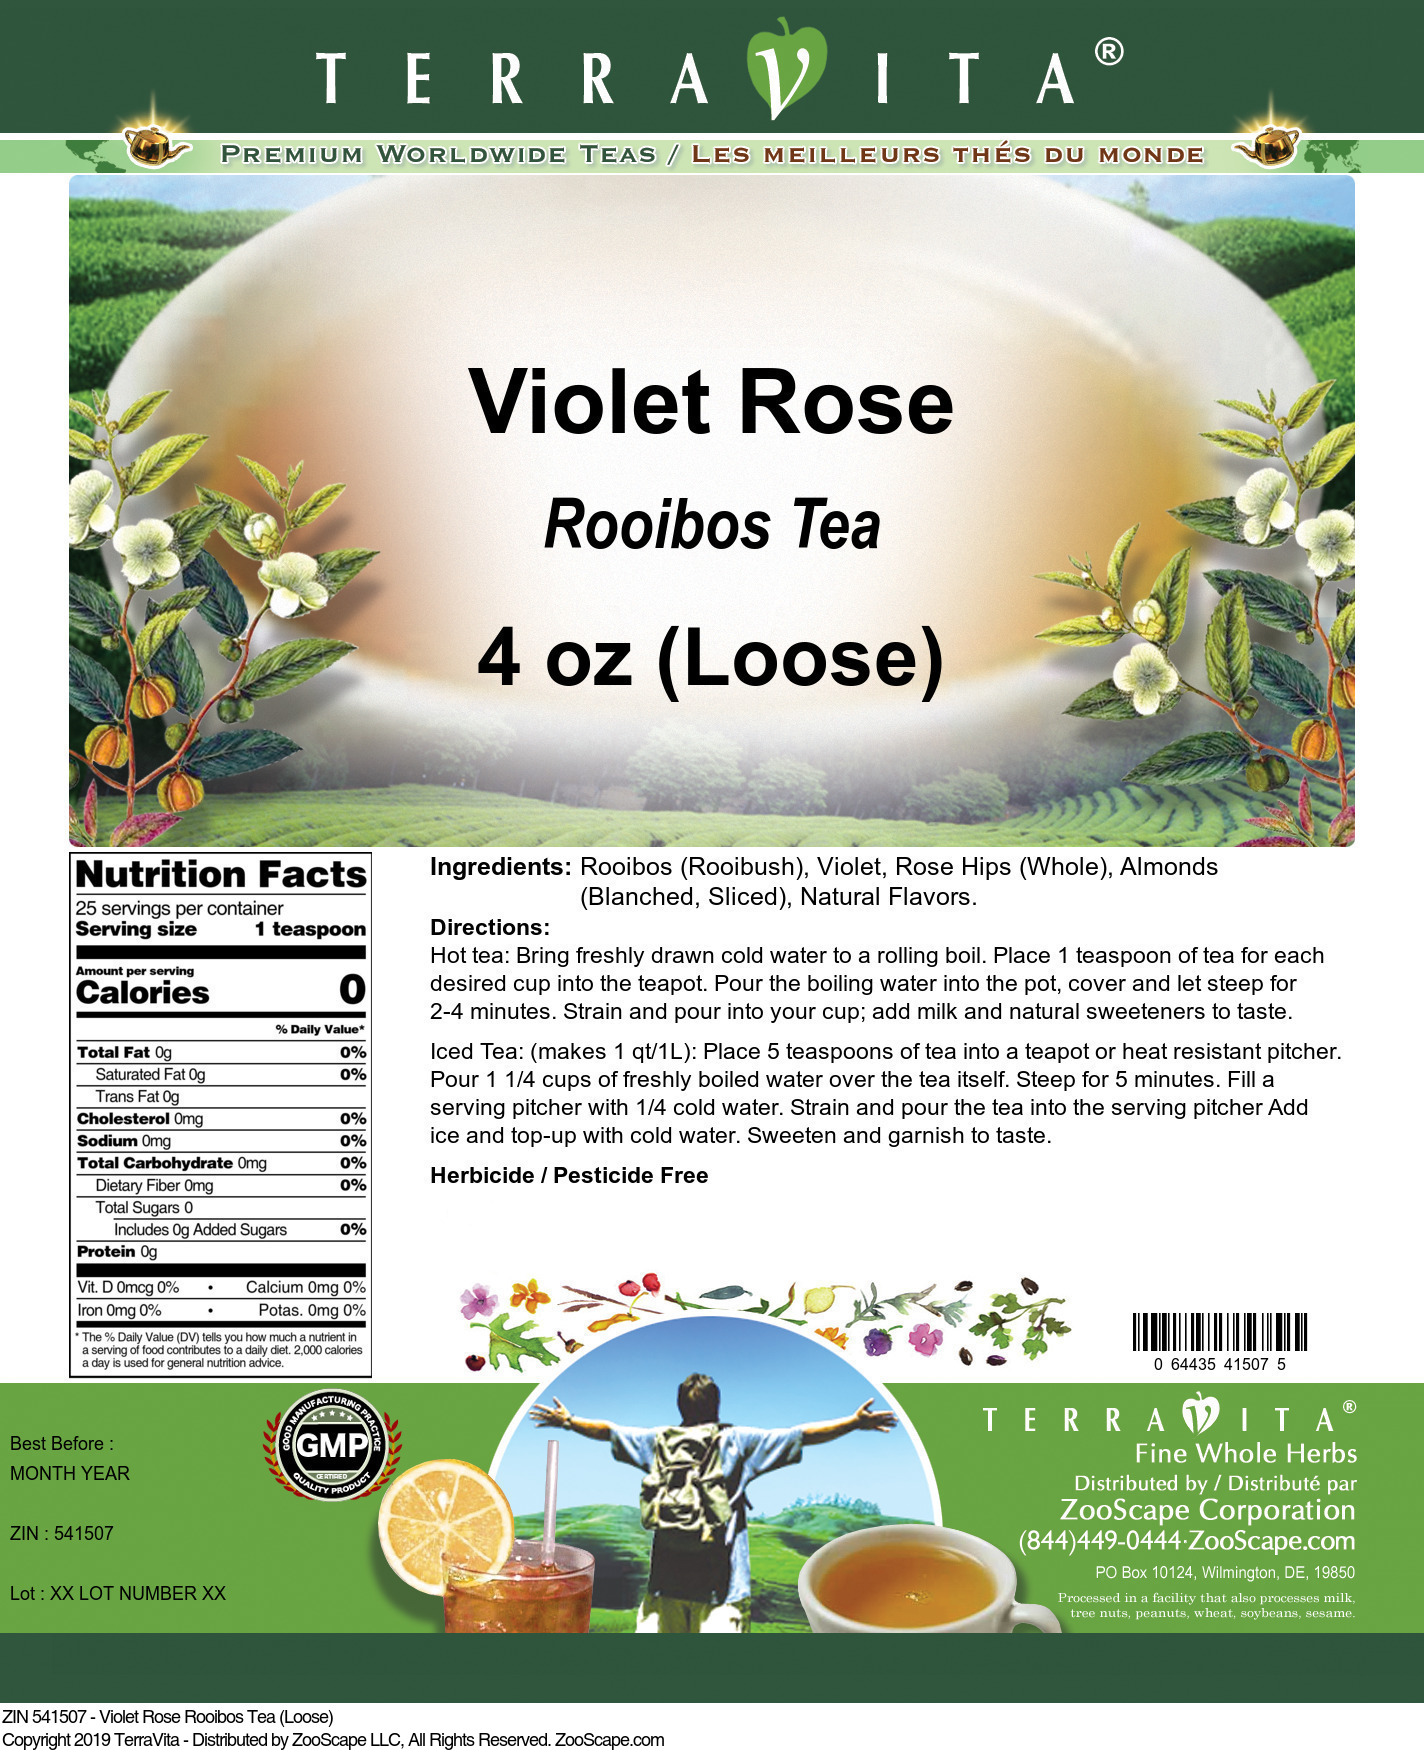 Violet Rose Rooibos Tea (Loose) - Label